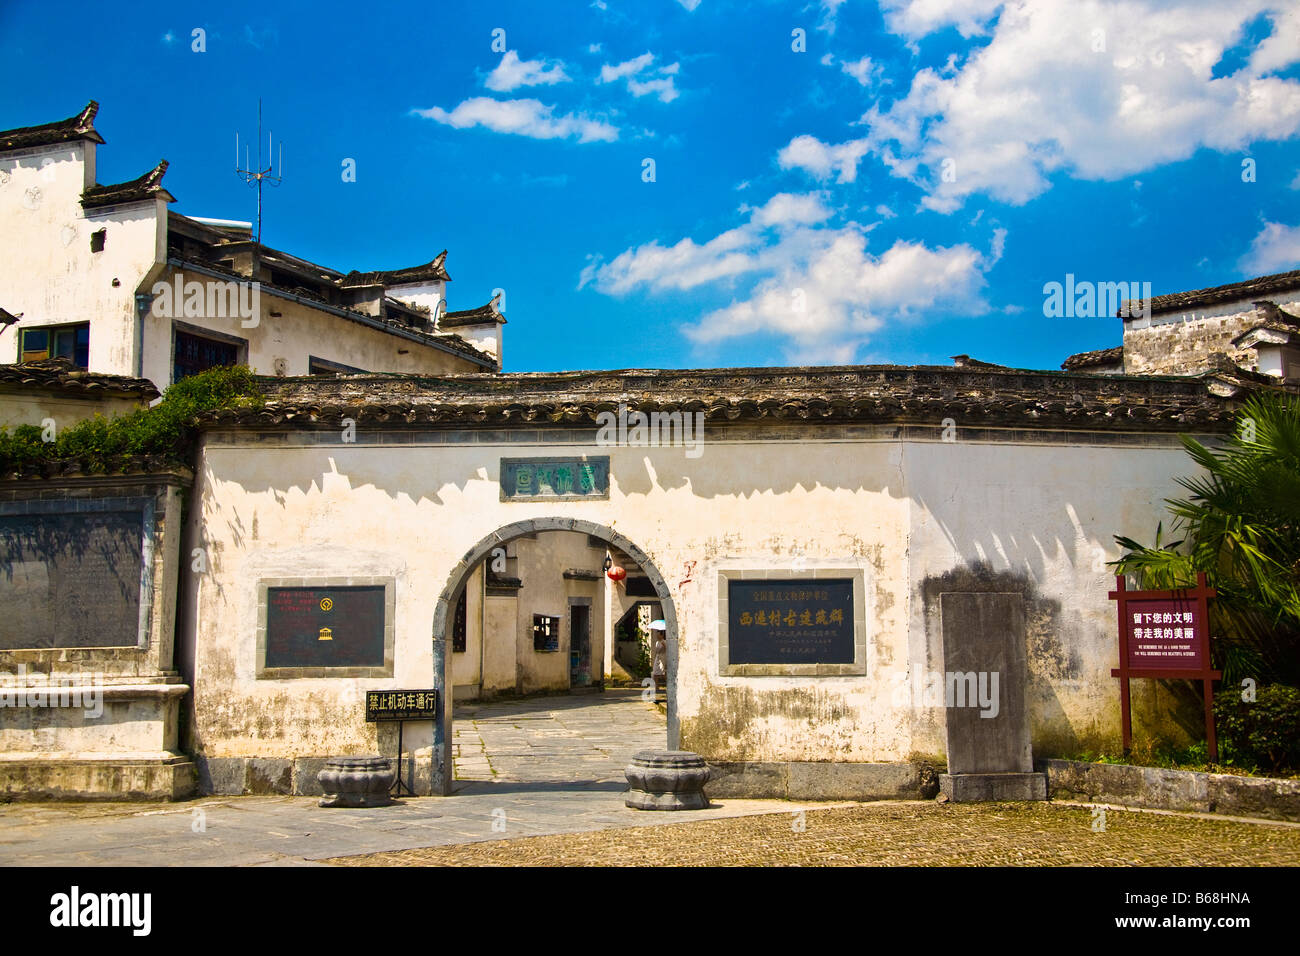 Facade of a house, Xidi, Anhui Province, China Stock Photo